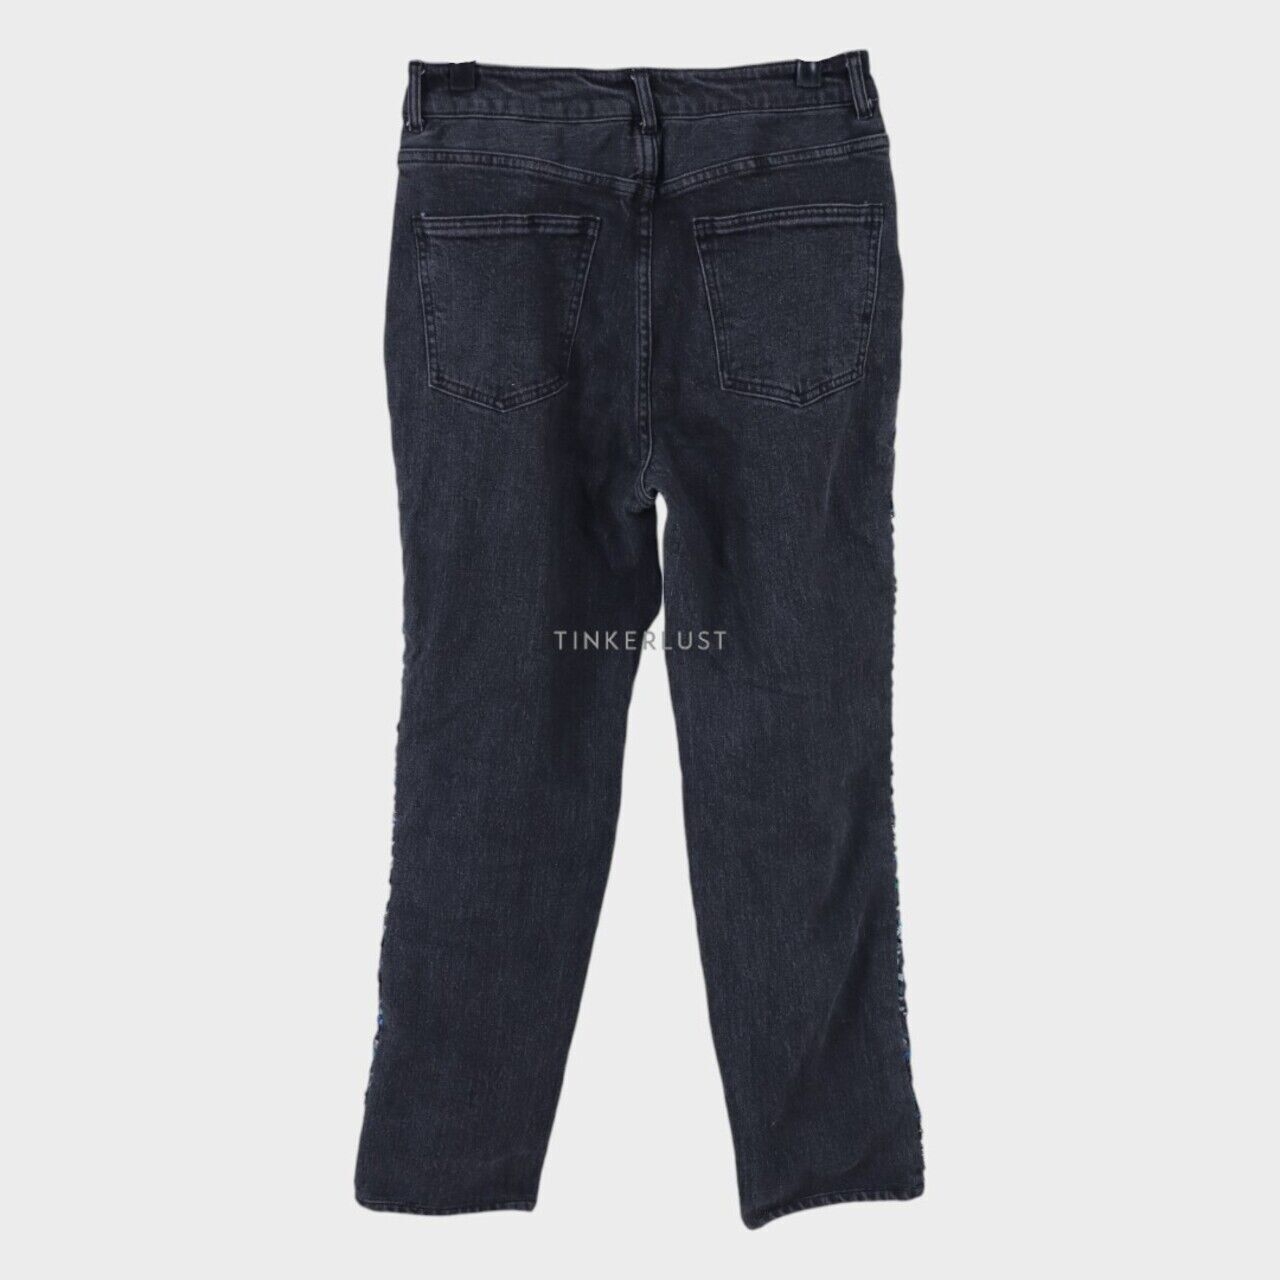 H&M Dark Grey Sequin Jeans Long Pants